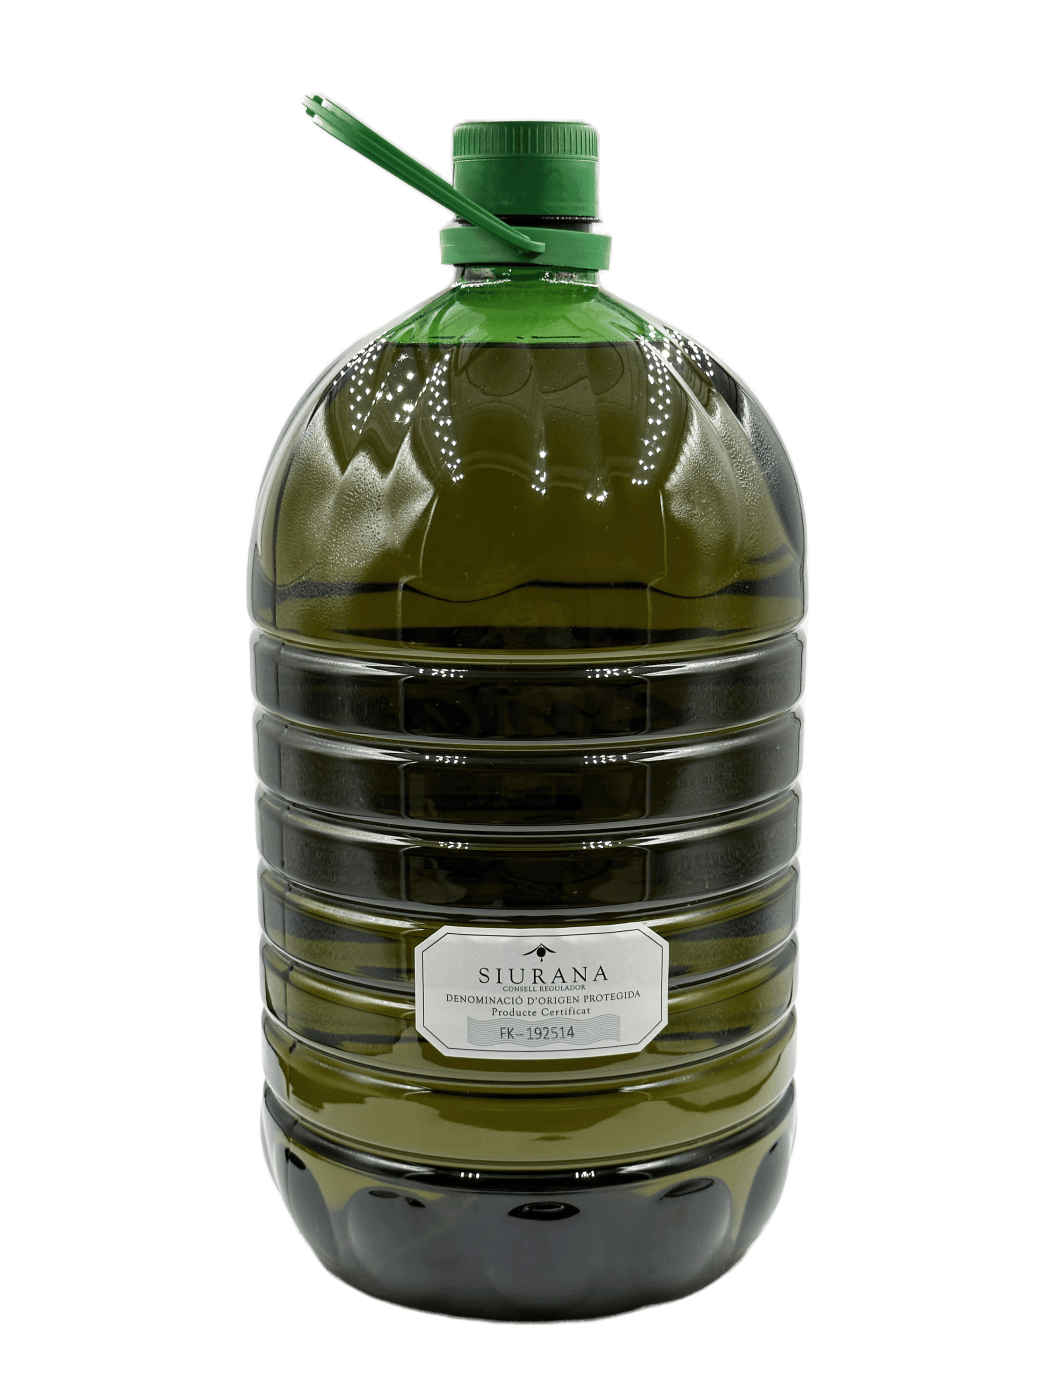 Aceite de Oliva Virgen Extra (Botella 5L)